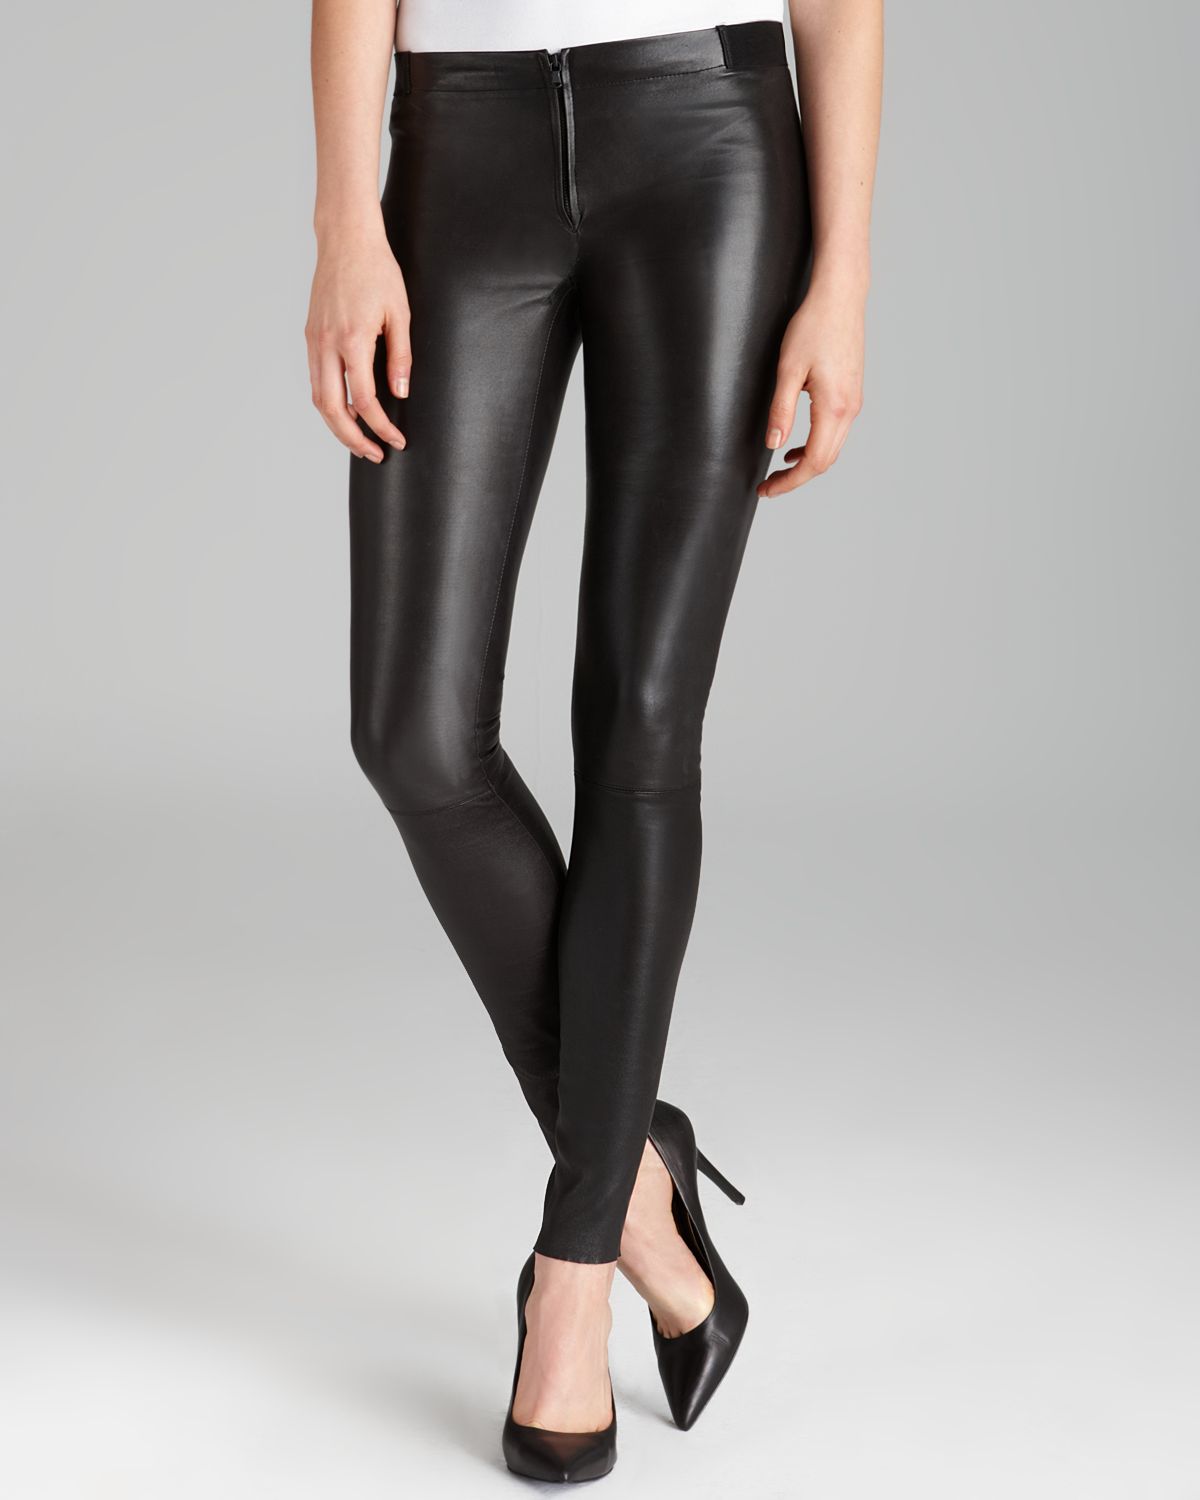 Alice + olivia Leather Front Zip Leggings in Black | Lyst